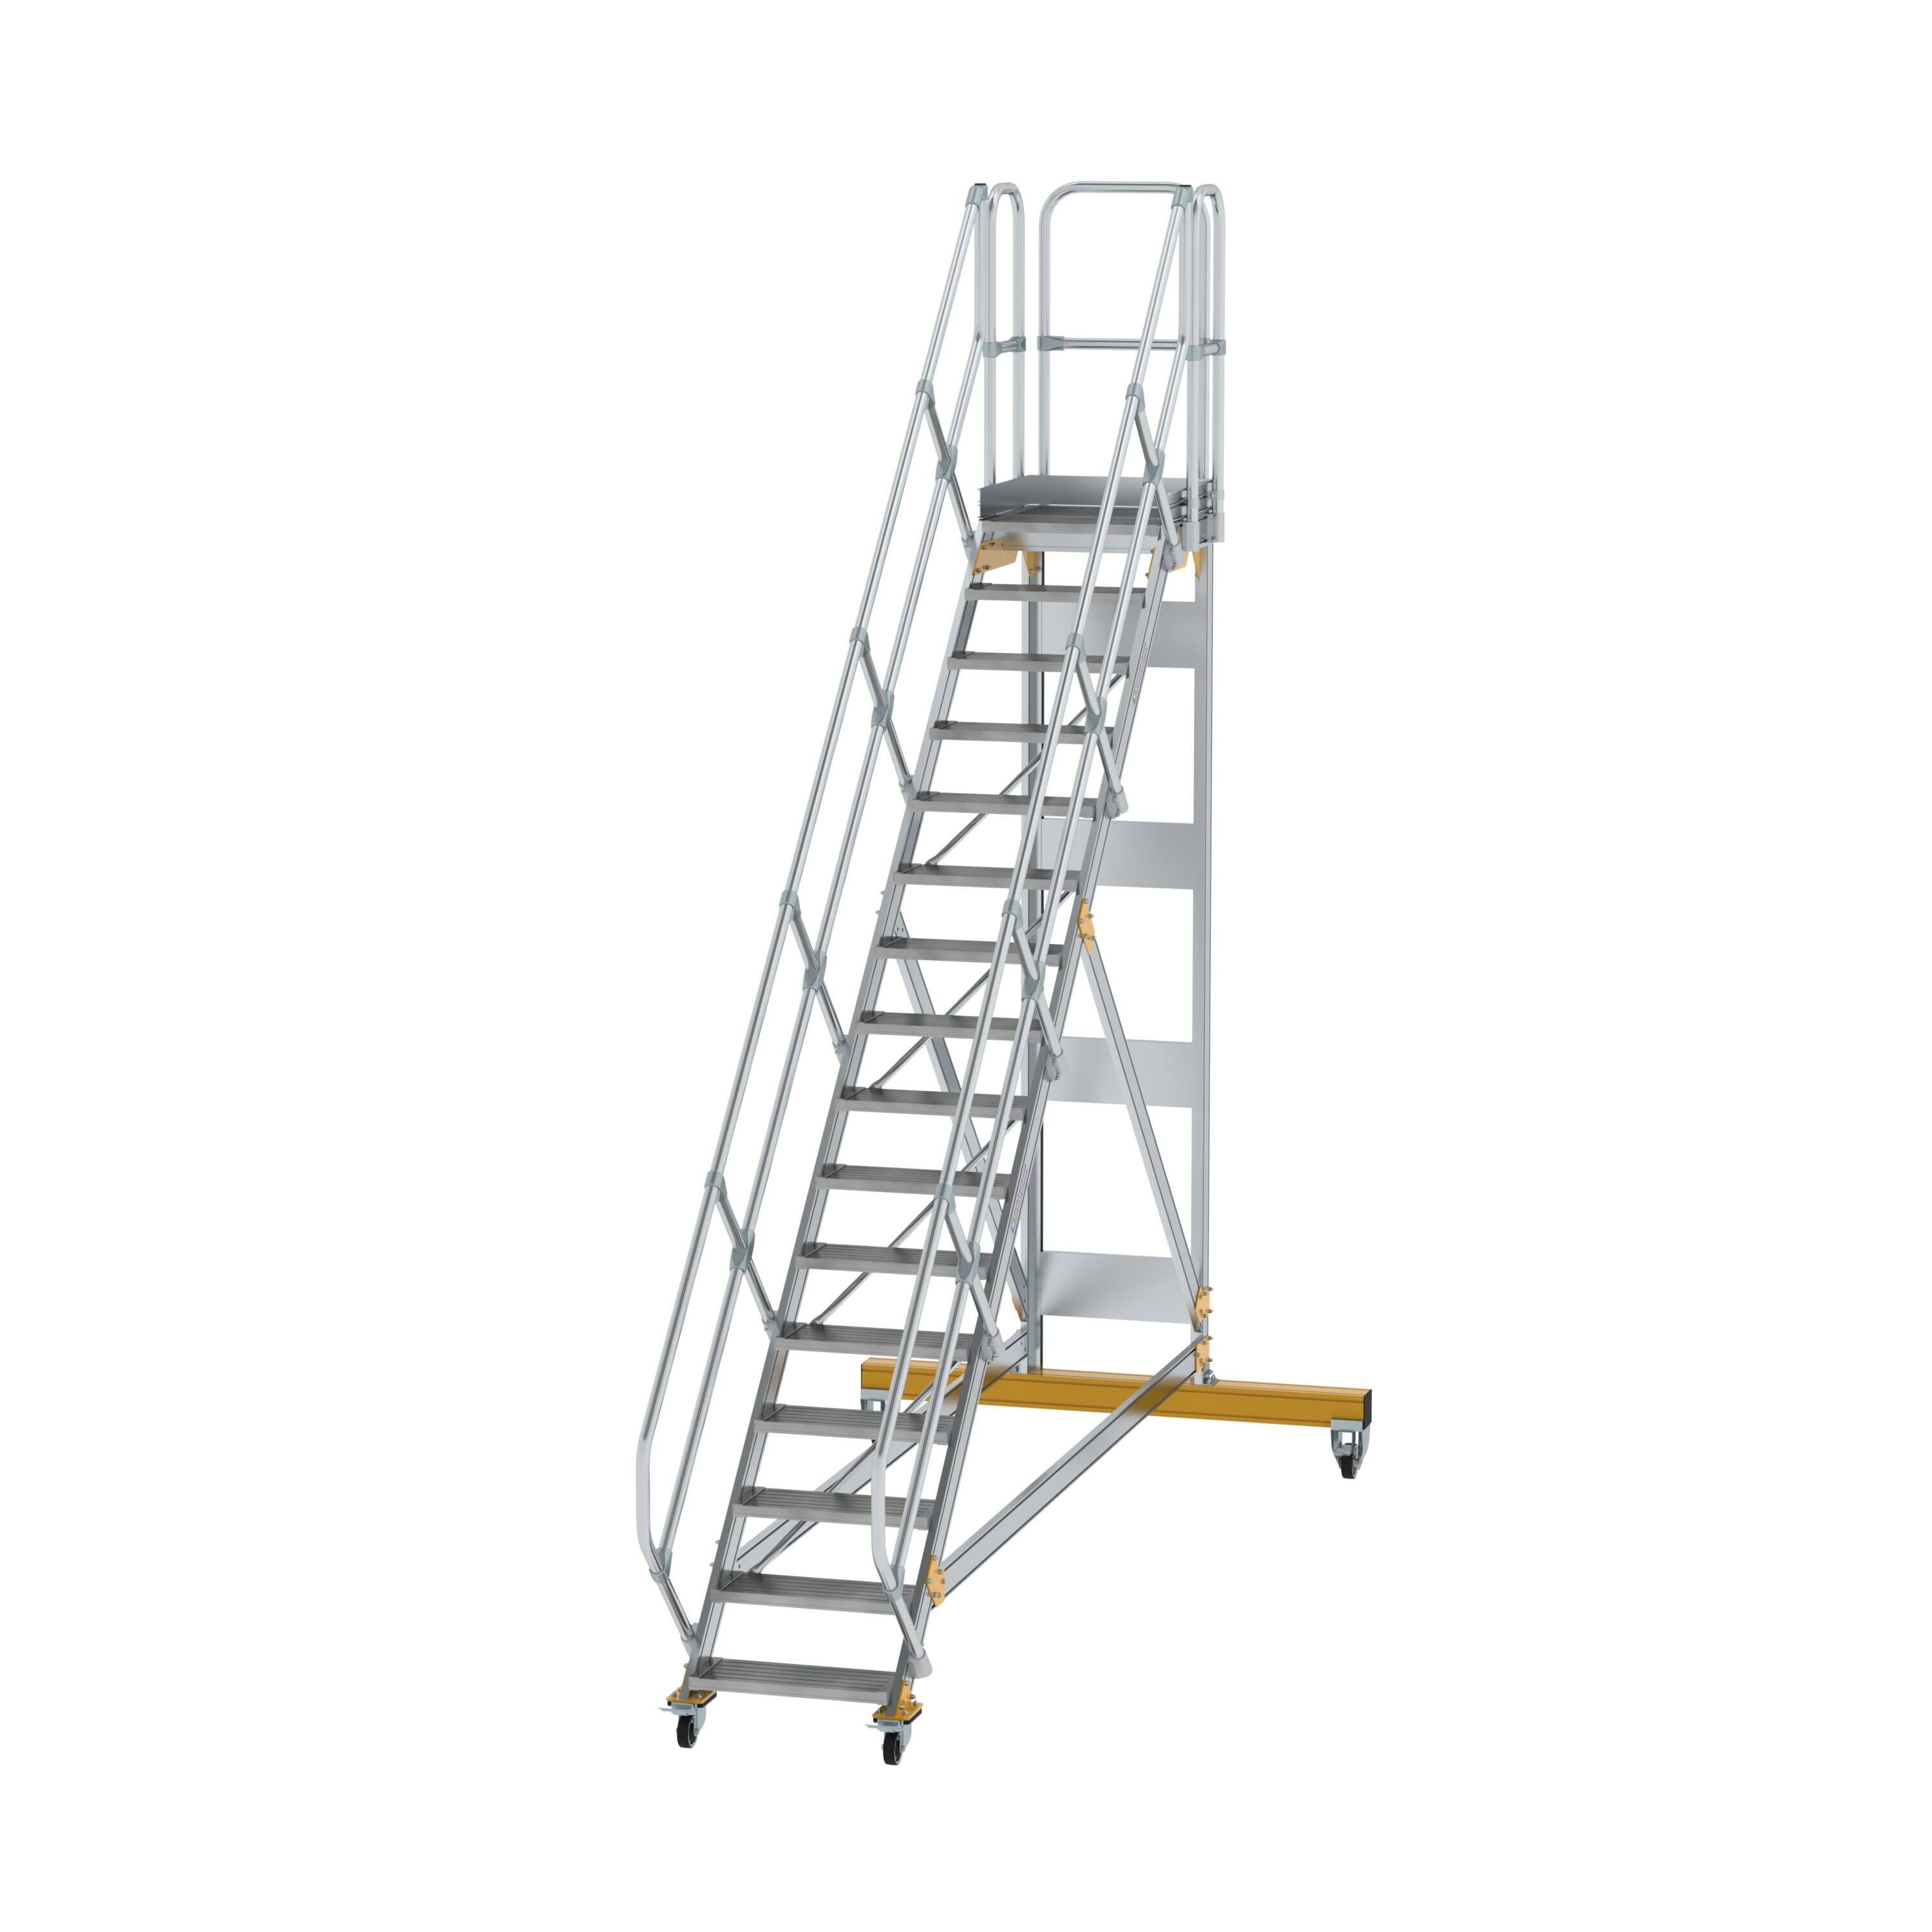 Plattformtreppe 45° fahrbar Stufenbreite 600 mm 16 Stufen Aluminium geriffelt